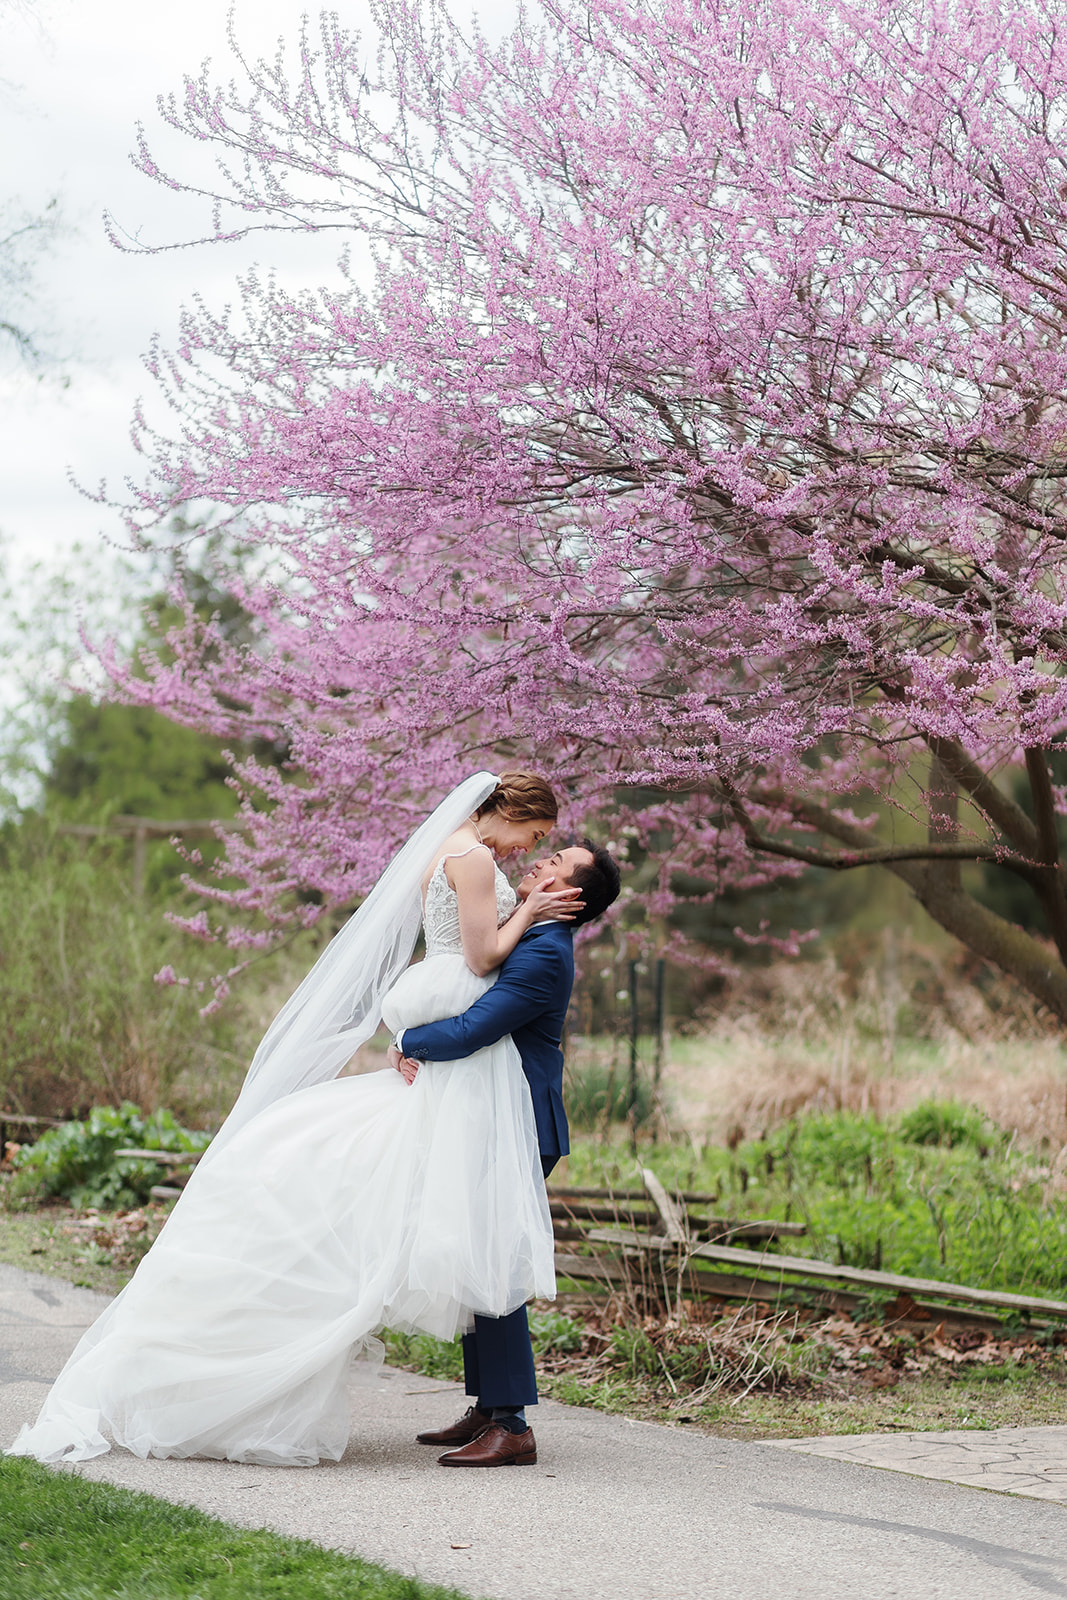 bridget reed and quan tran wedding at toledo botanical gardens